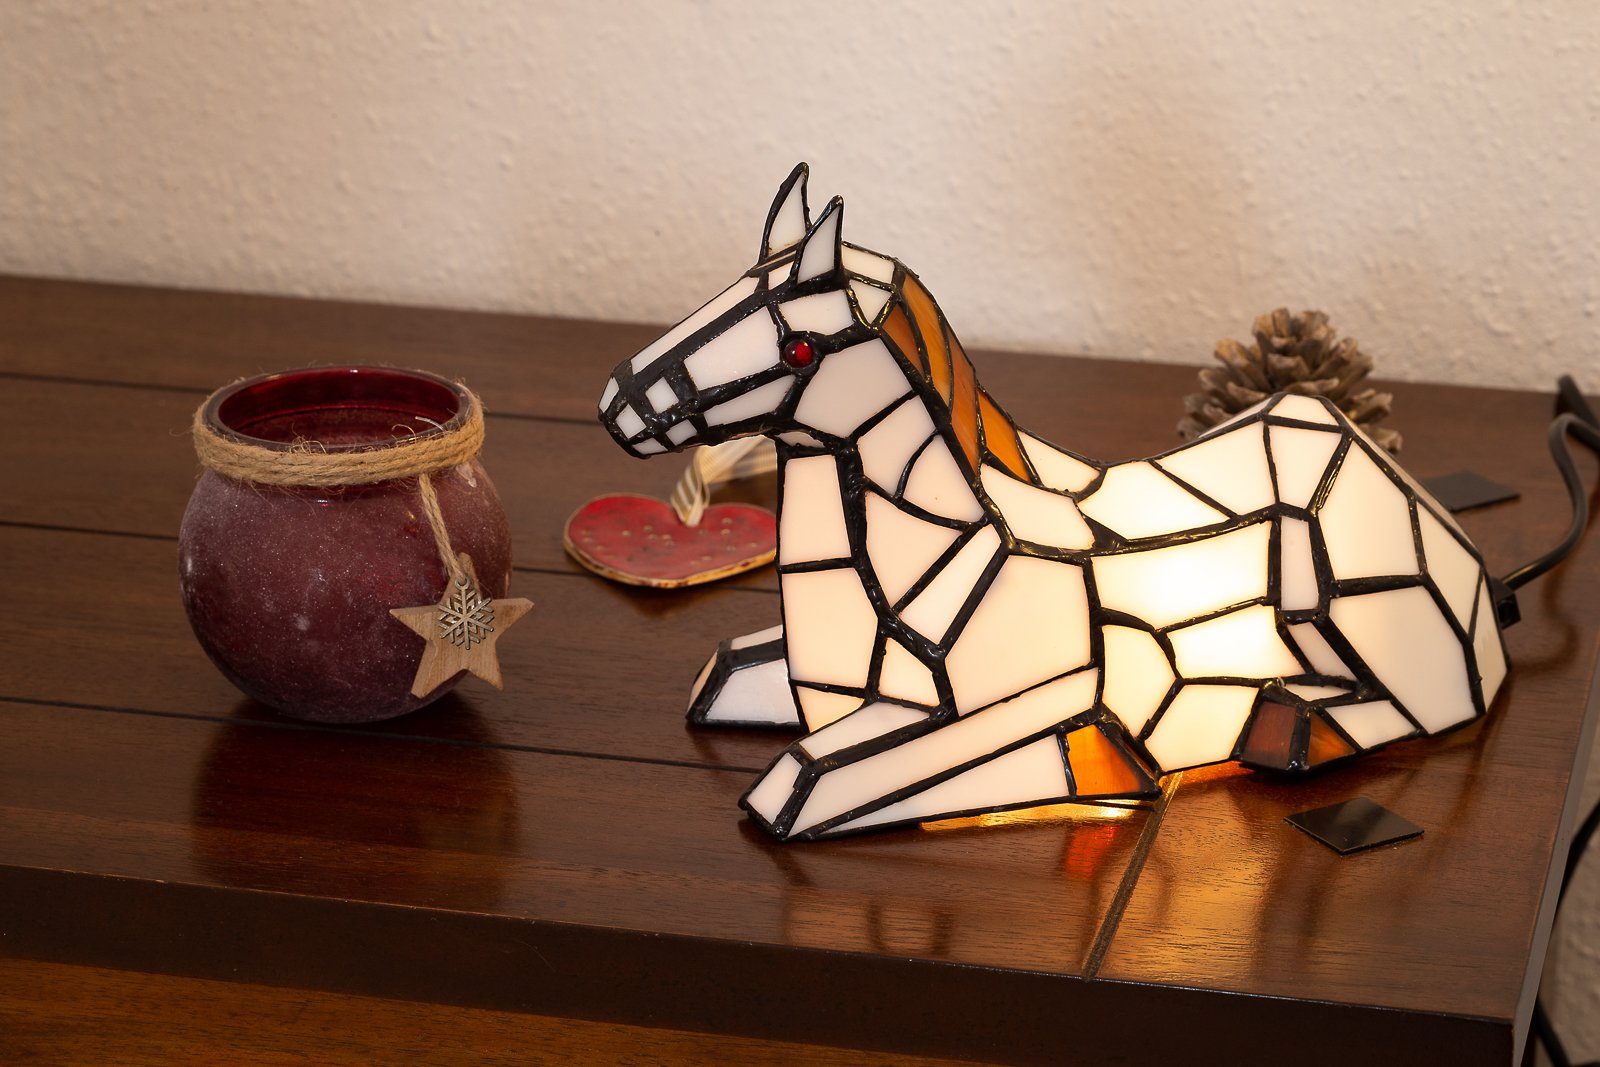 Lampe Tif163 Style Tiffany Birendy Pferd BIRENDY Dekorationslampe Tischlampe Stehlampe